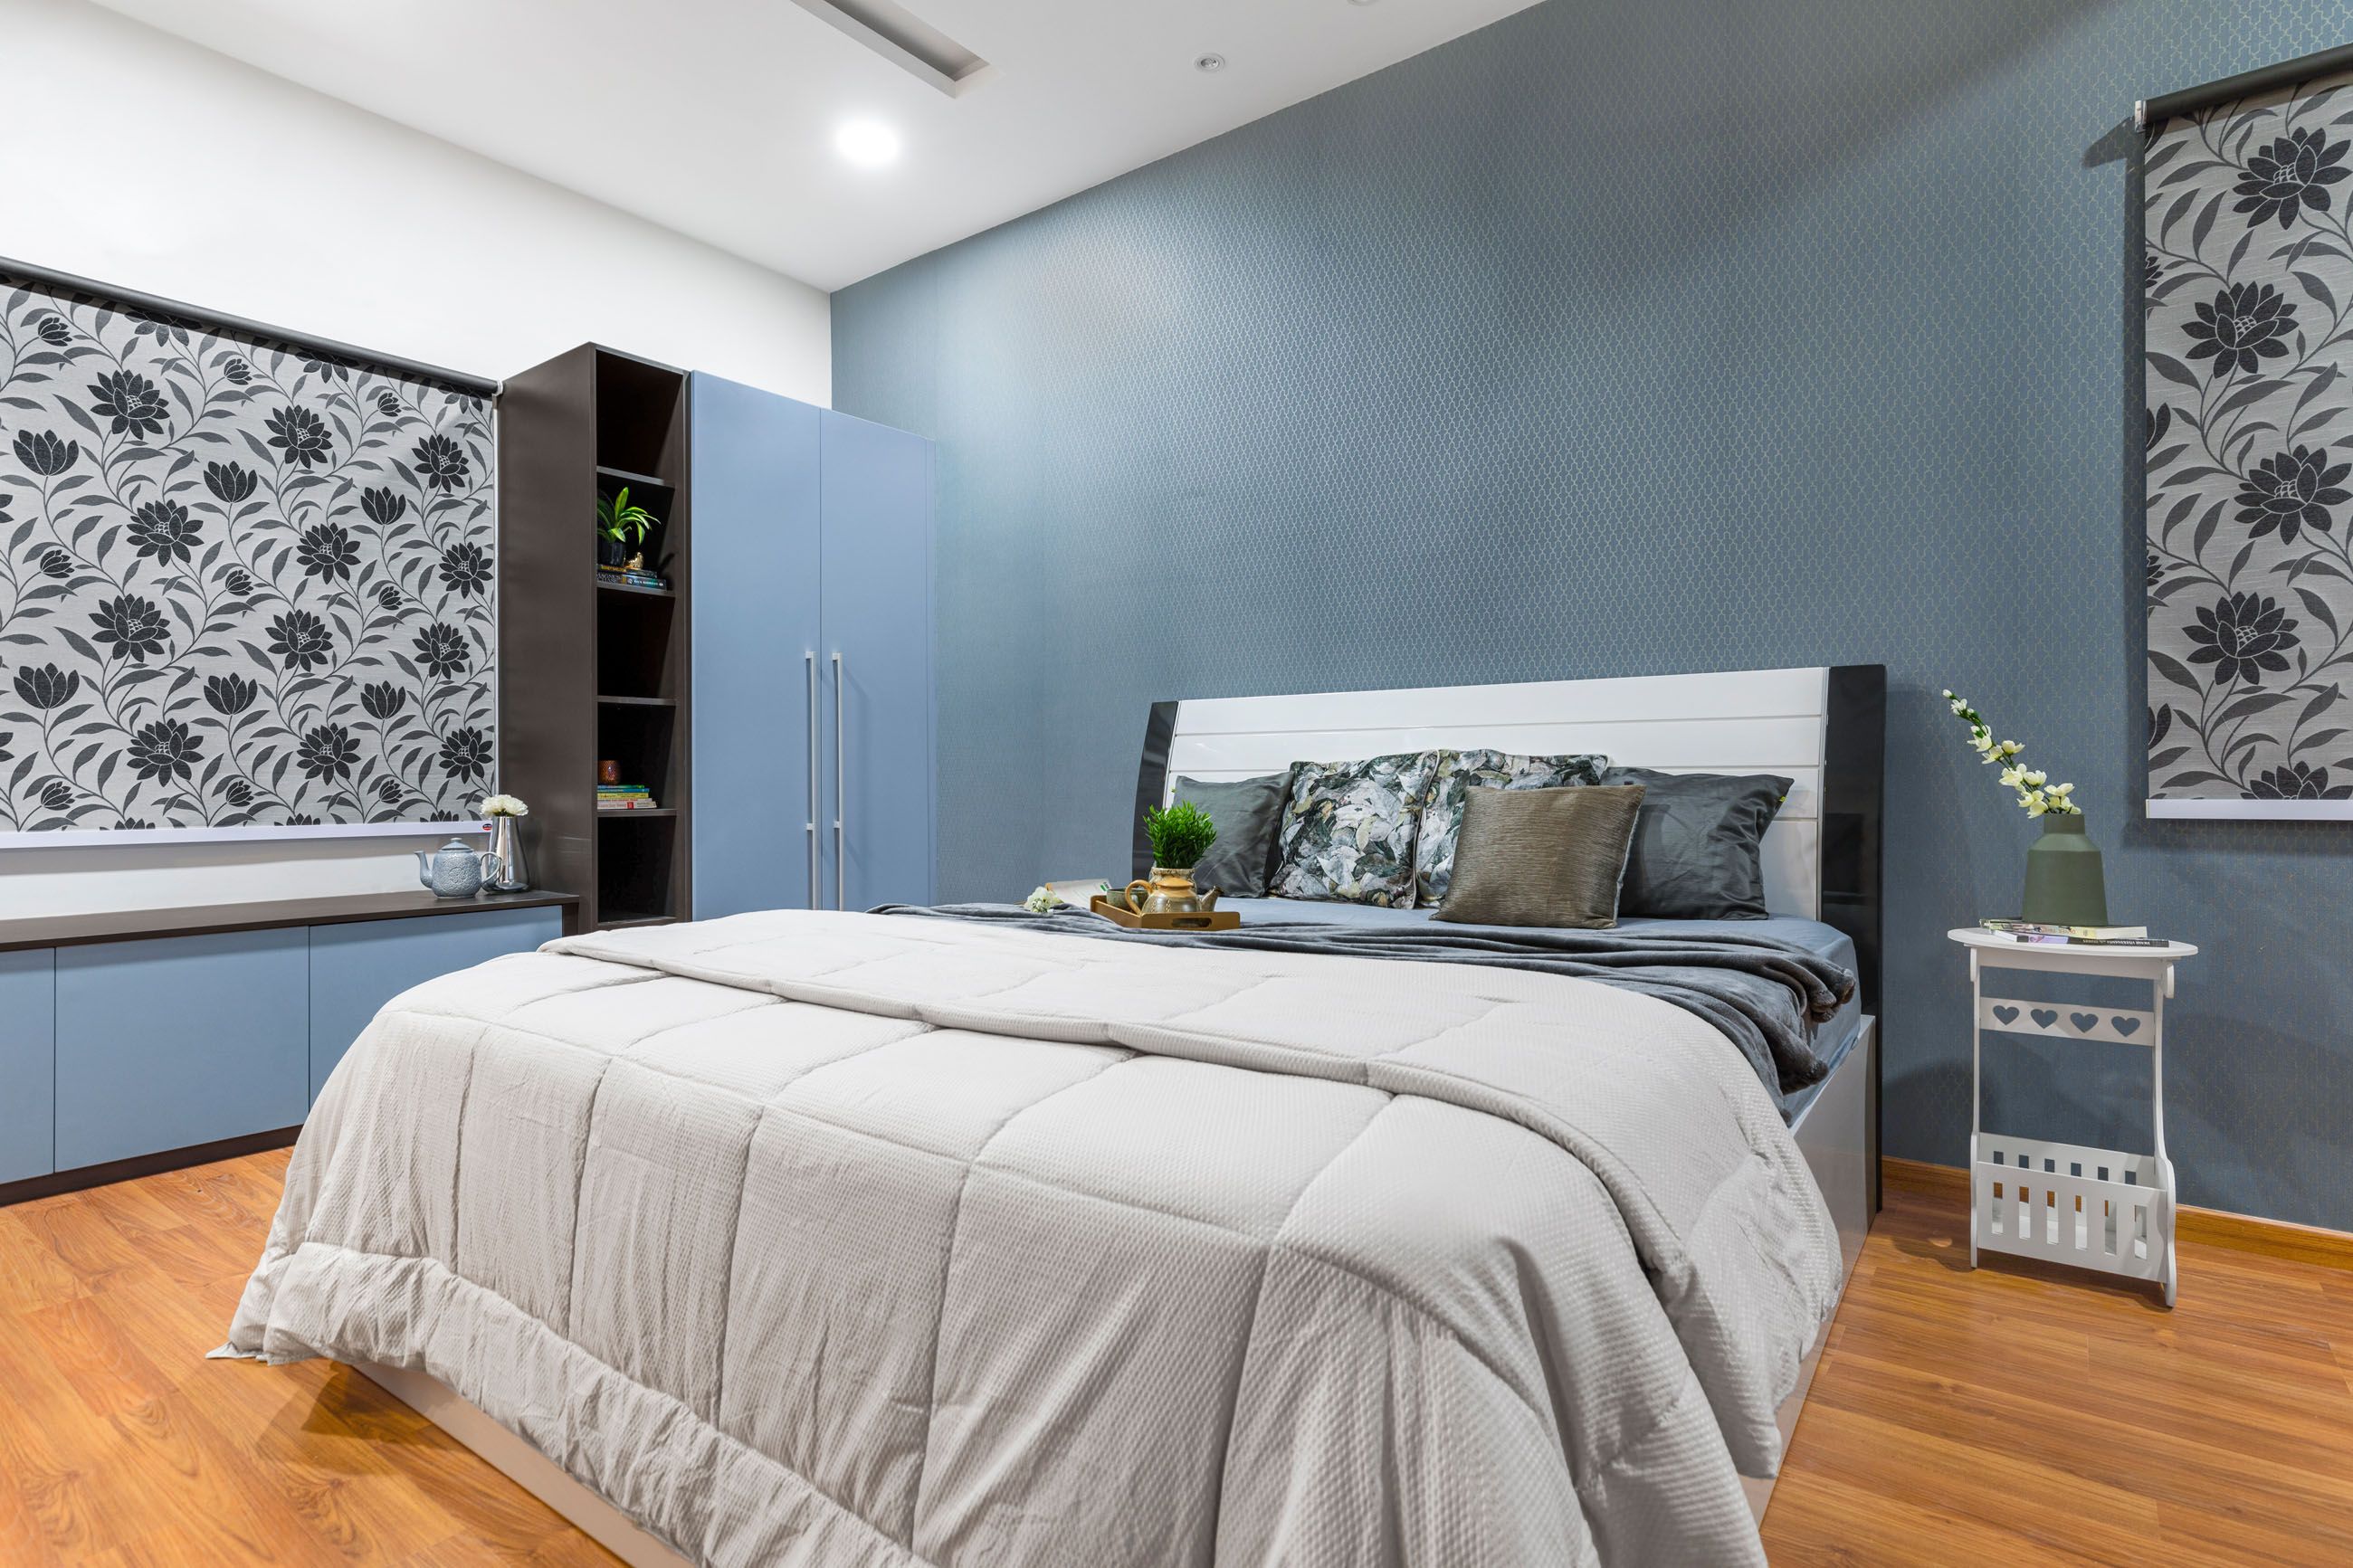 Modern Blue Guest Bedroom Design With Patterned Wallpaper And 2-Door Swing Wardrobe